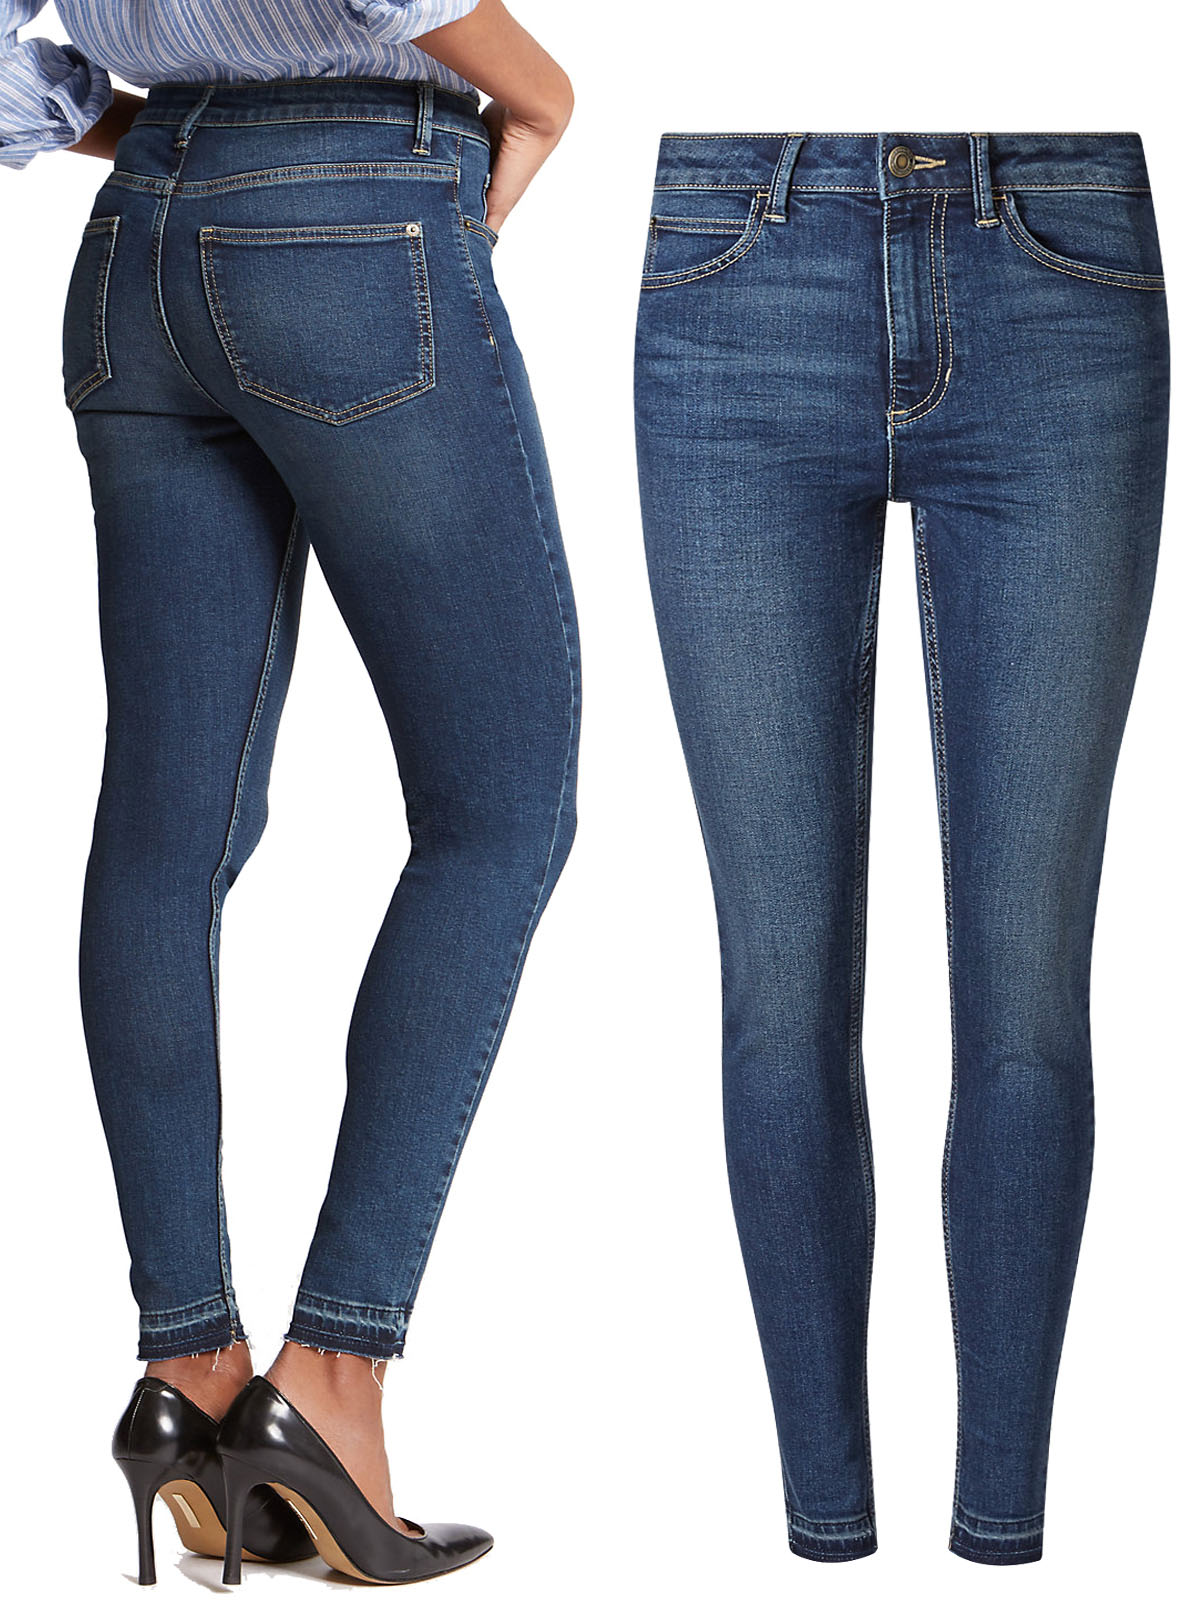 m&s indigo jeans